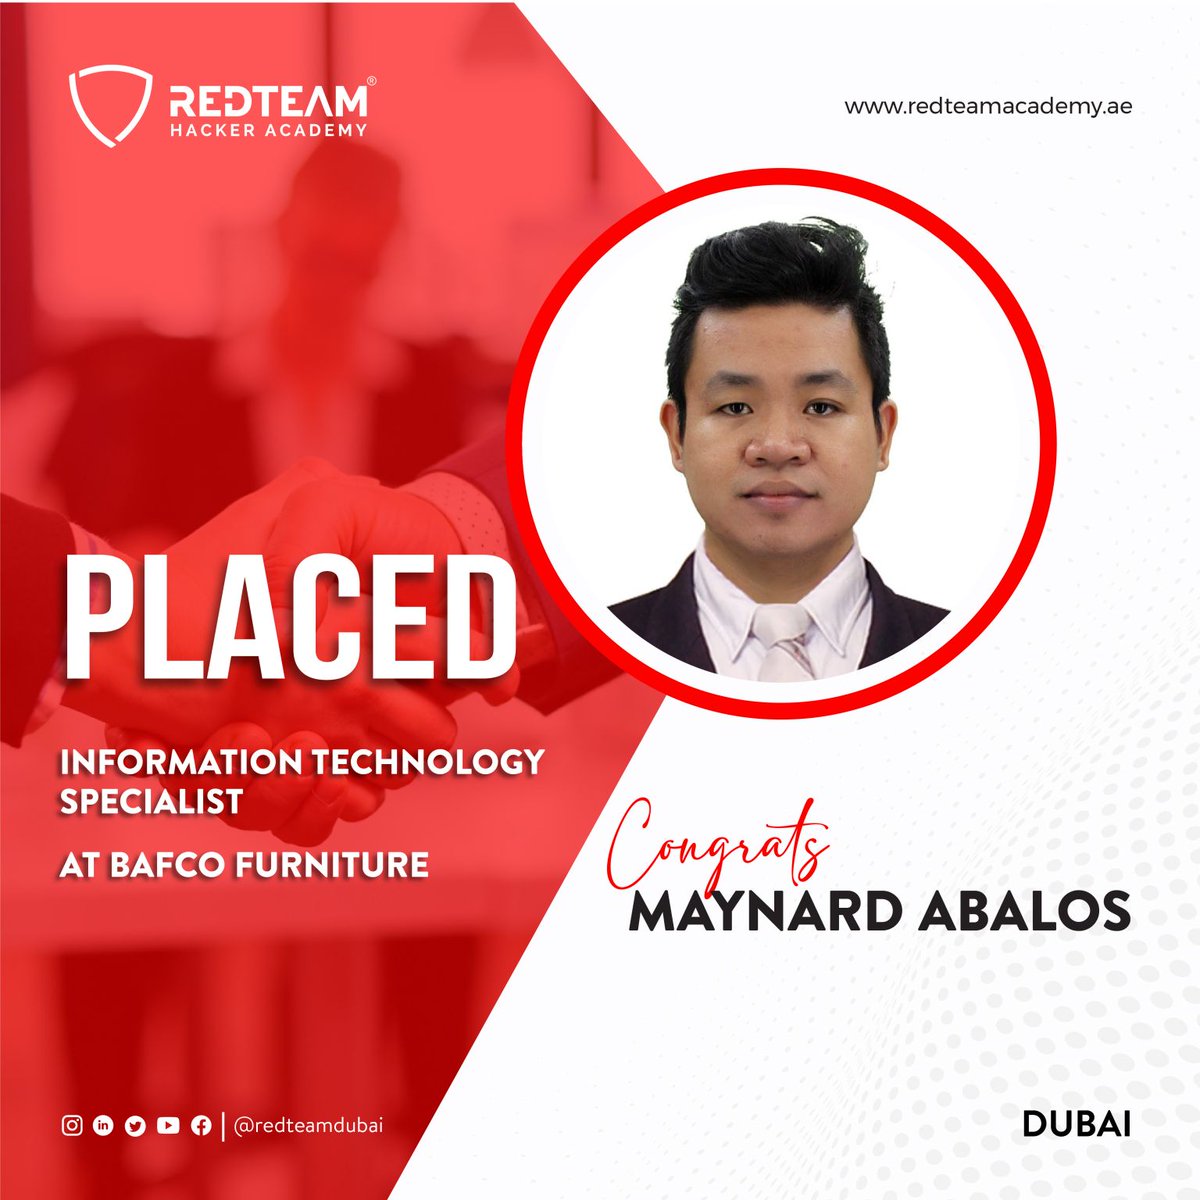 #placements2023

Congratulations to Maynard Abalos for securing IT specialist position at BAFCO Furniture

#cybersecuritytraining #dubai #jobseeker #cybersecurityconsultant #jobopportunities #fazalmarakakar